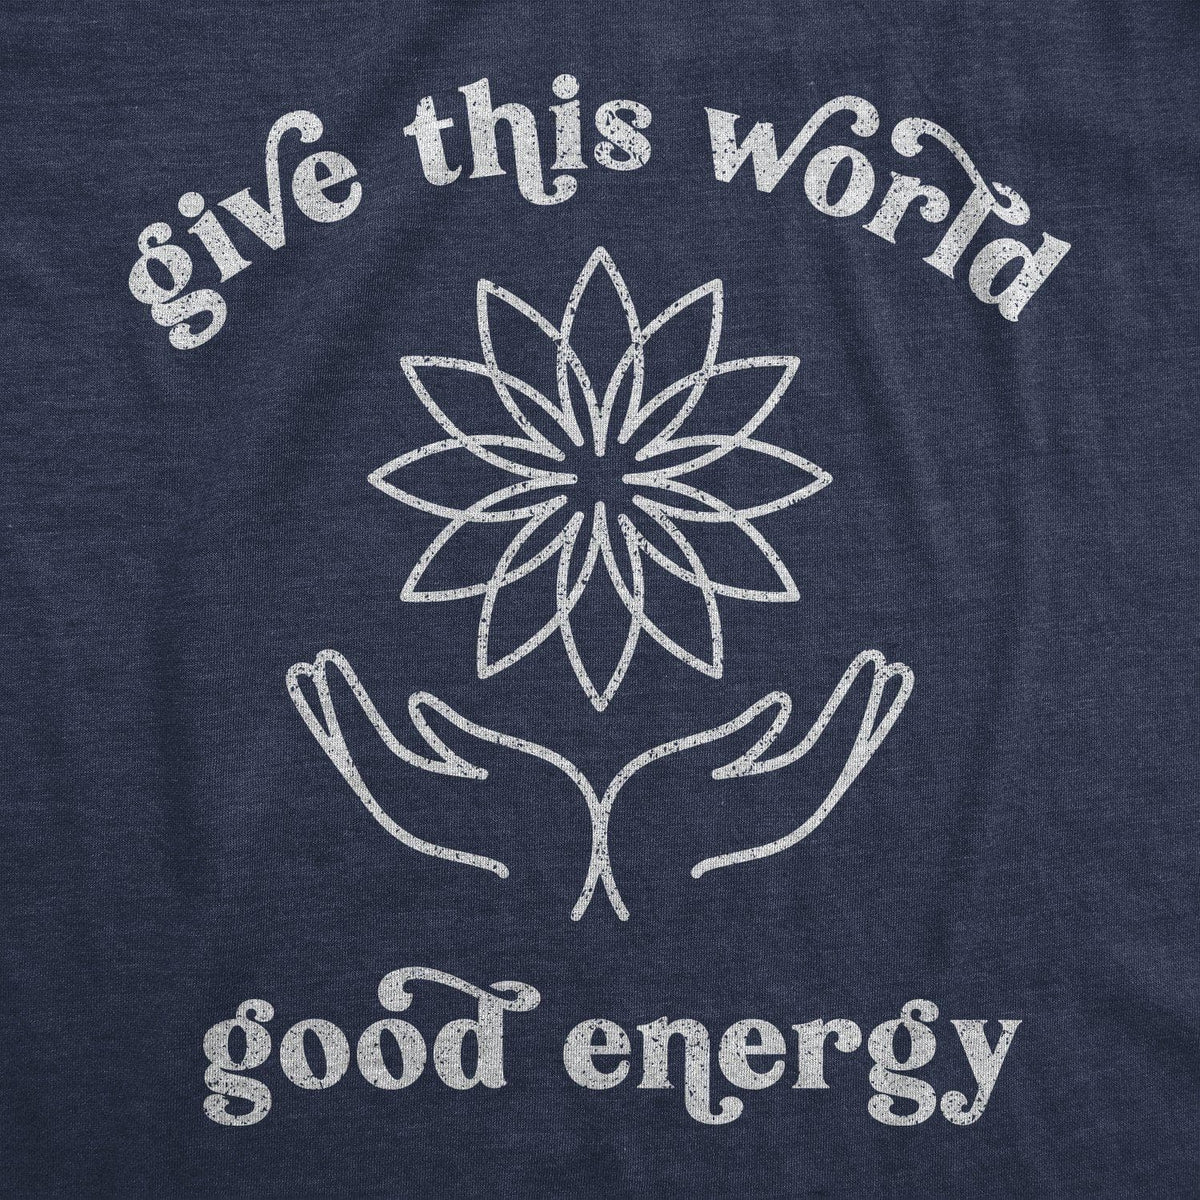 Give The World Good Energy Women&#39;s Tshirt - Crazy Dog T-Shirts